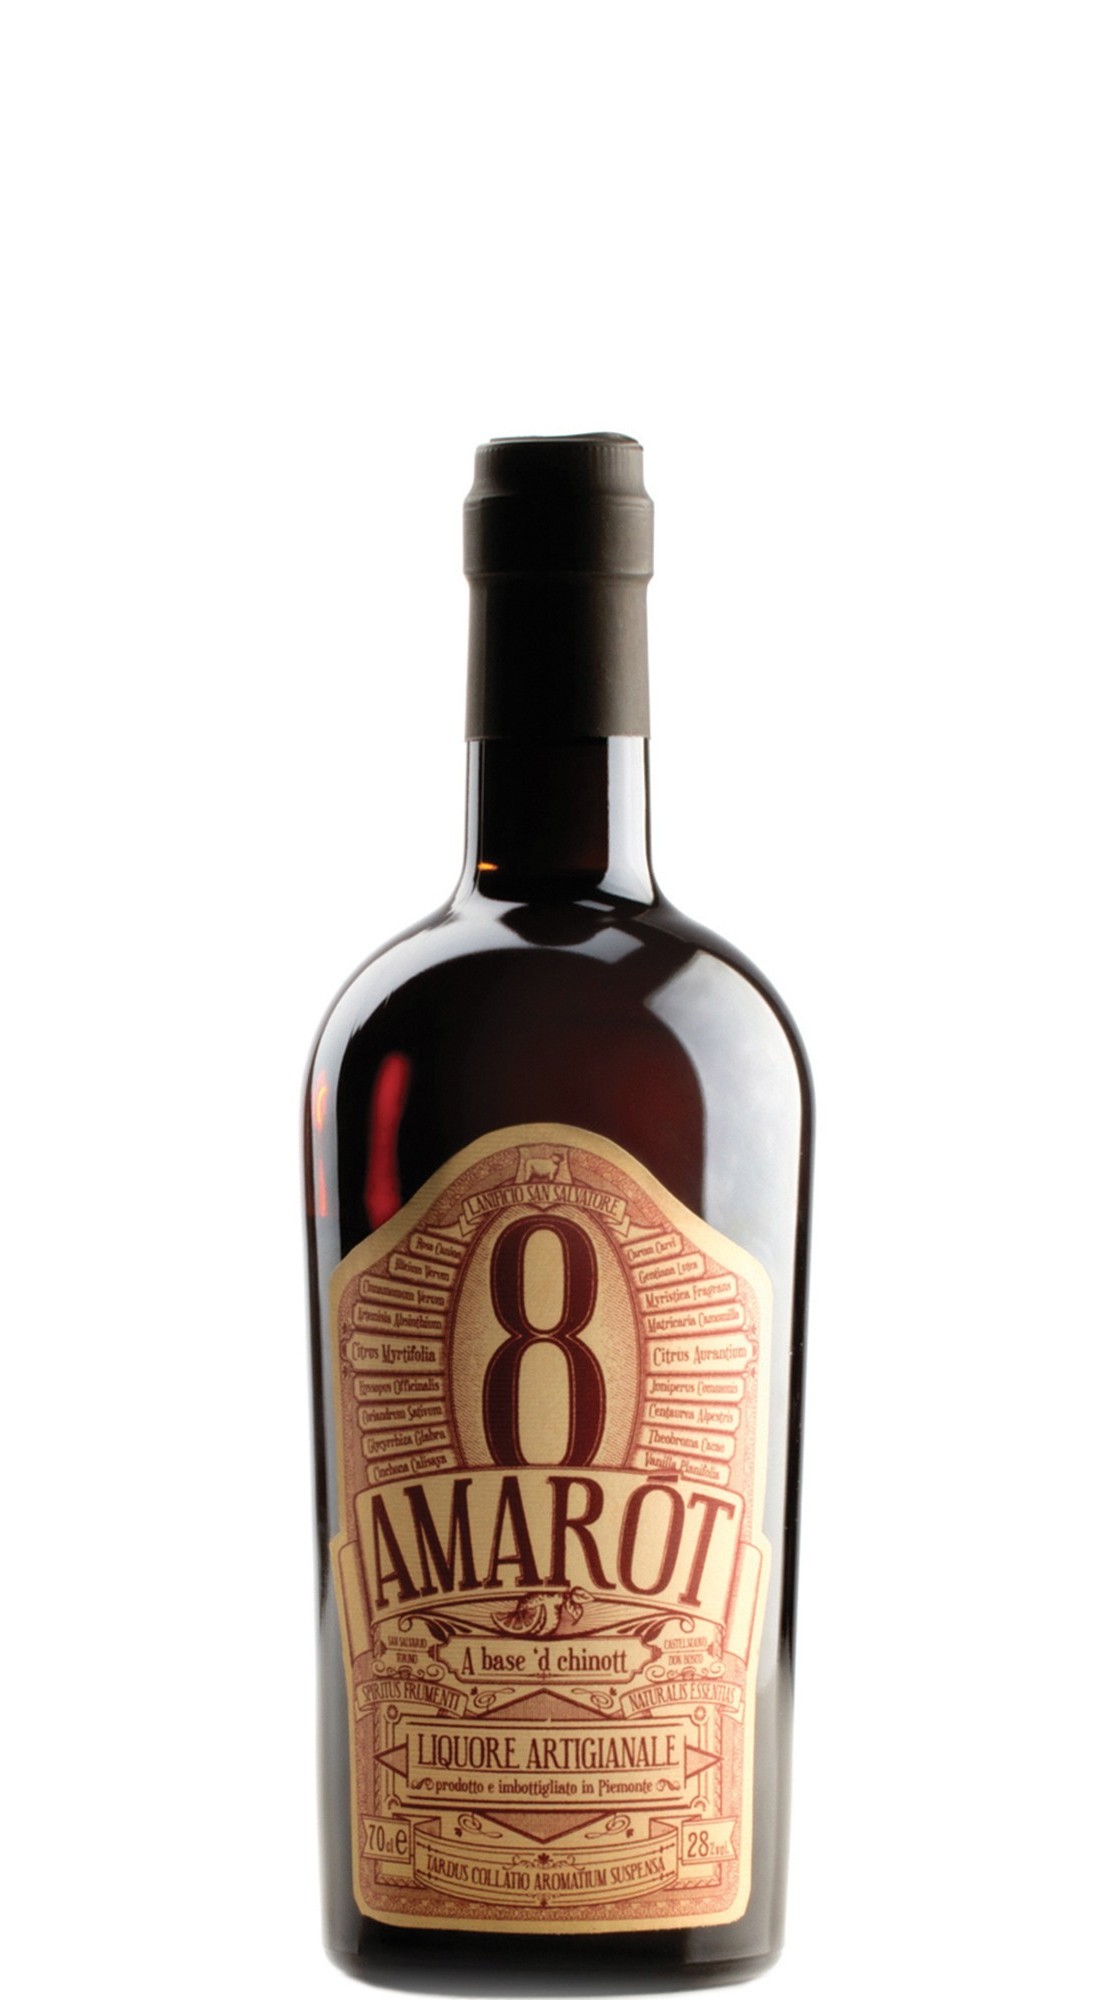 Amarot Liquore